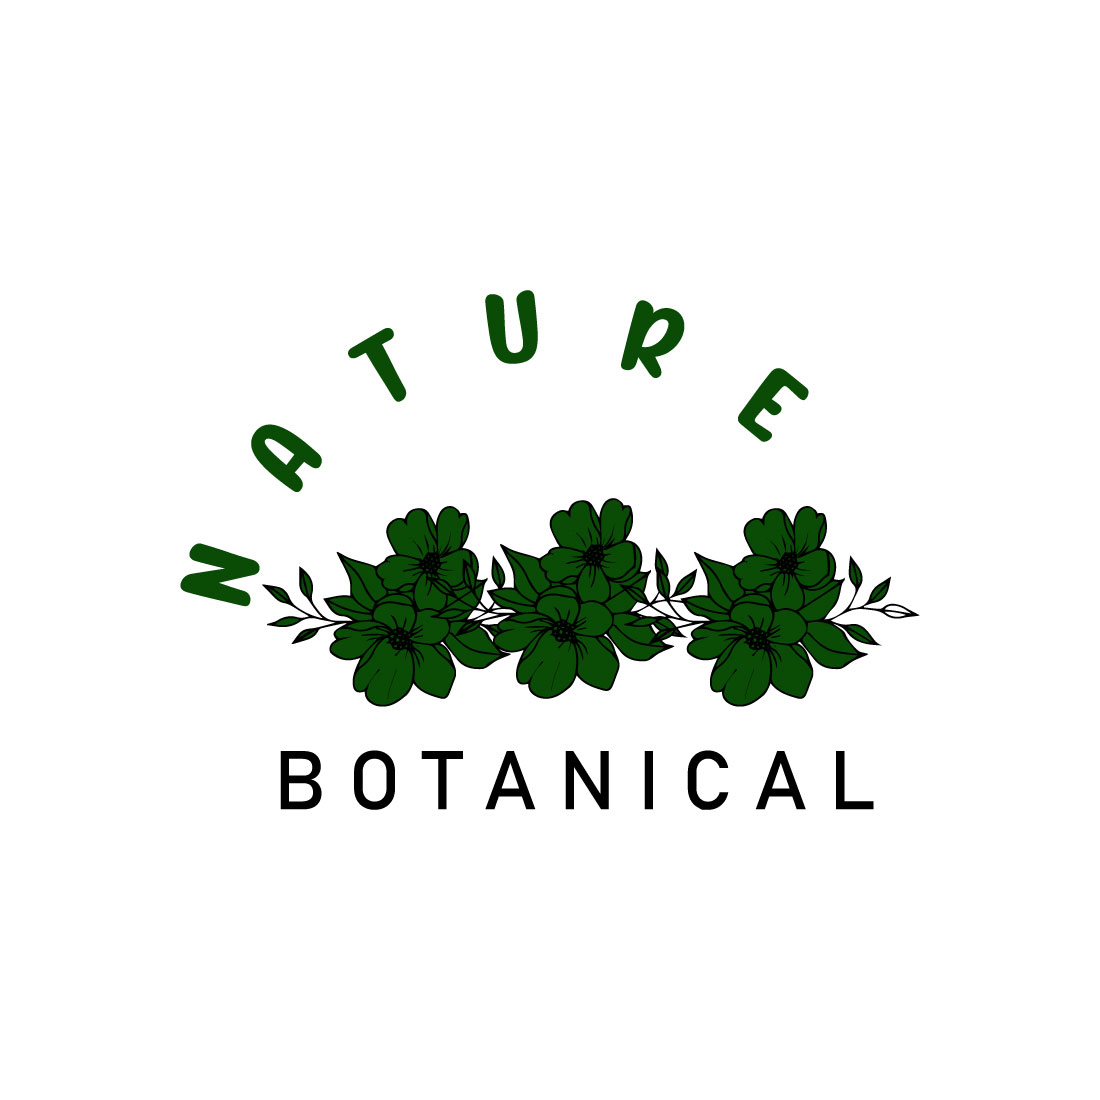 Free botanical green drawing logo cover image.